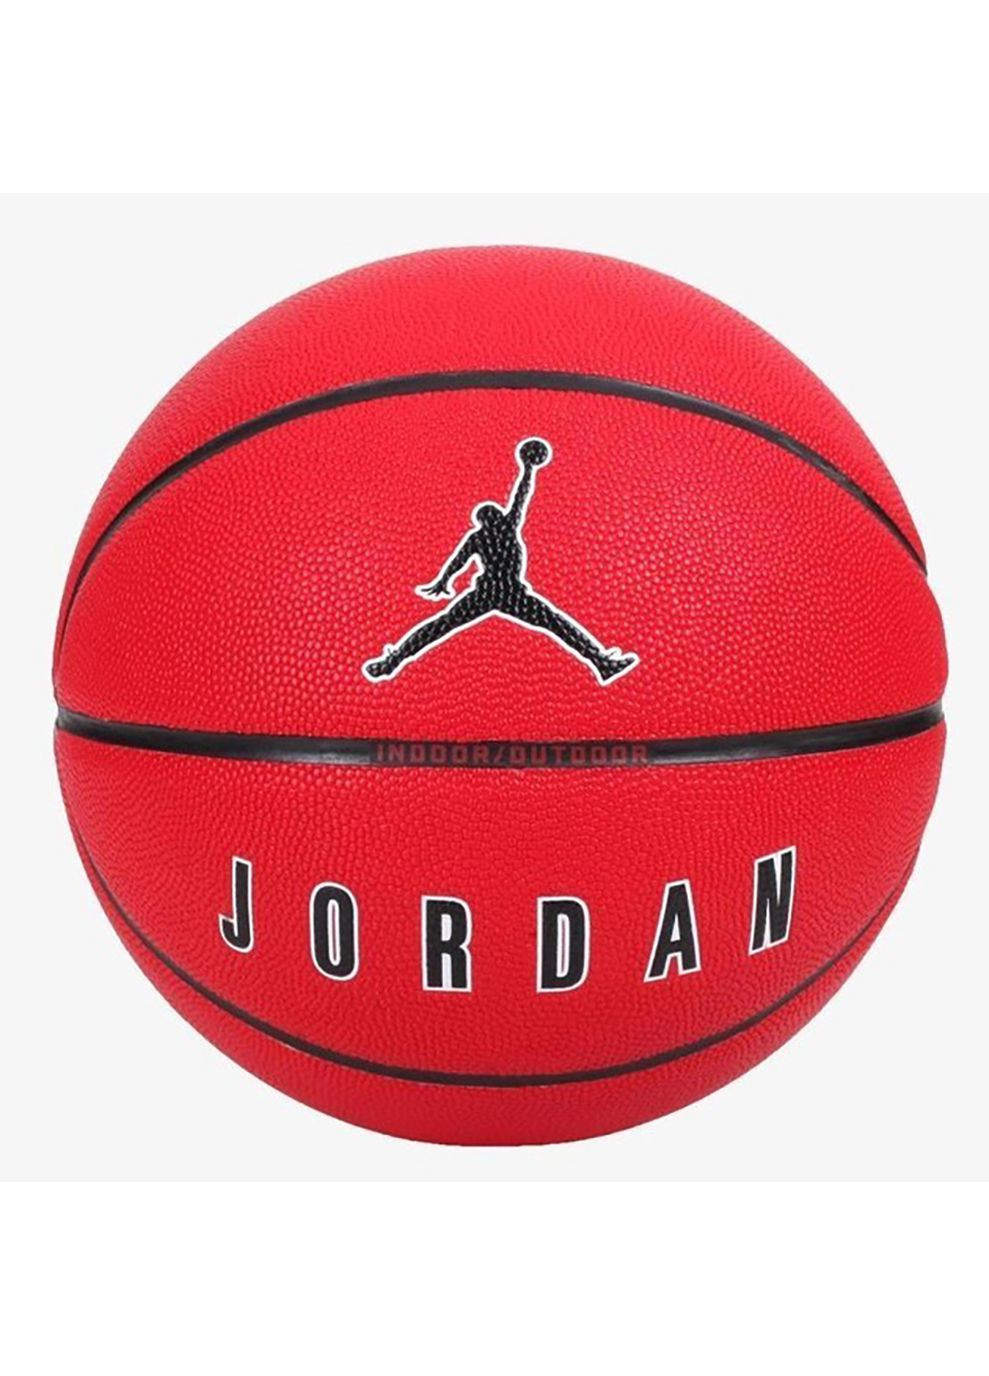 Мяч баскетбольный NIKE ULTIMATE 2.0 8P DEFLATED UNIVERSITY RED/BLACK/WHITE/BLACK size 7 Jordan (268747528)